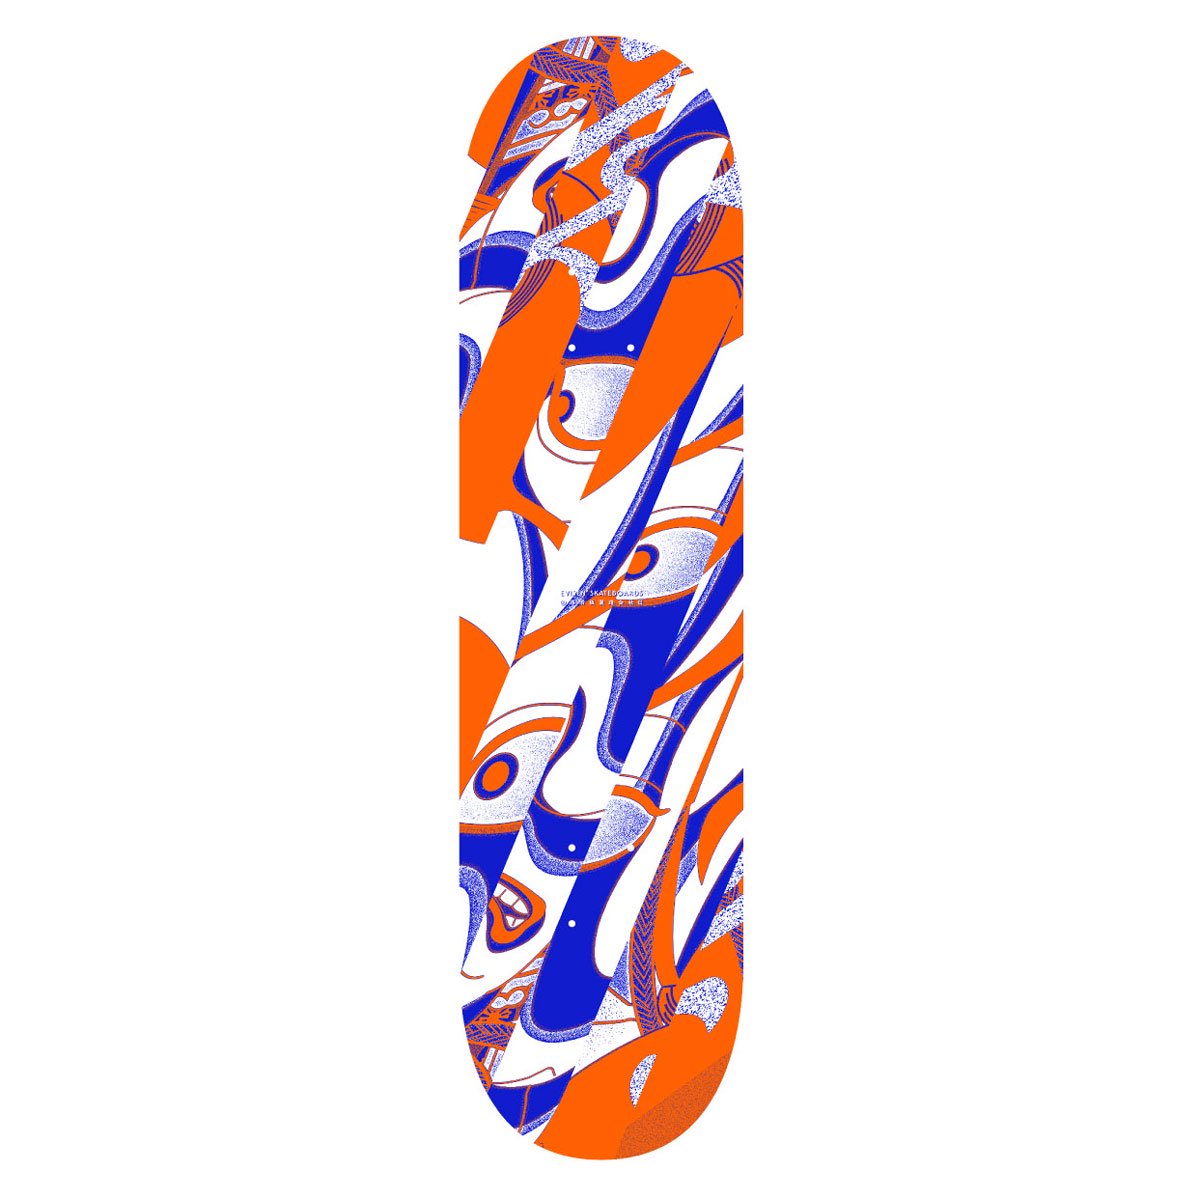 Evisen skateboards 8.0 - スケートボード